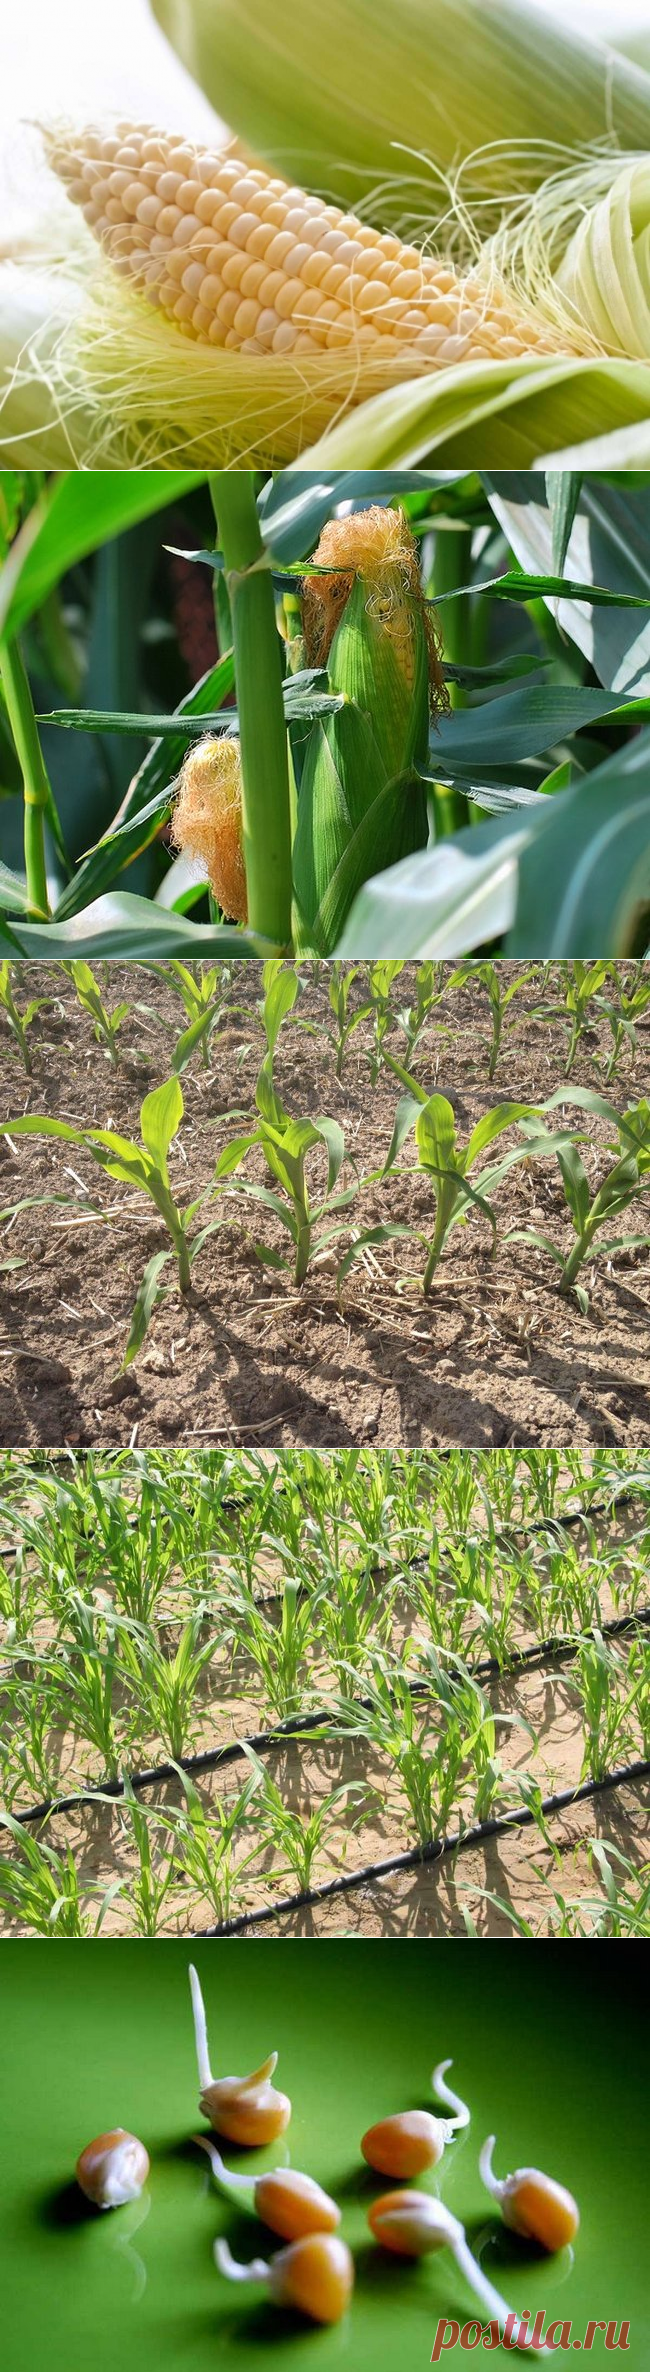 В каком месяце сажают кукурузу. Технология посадки кукурузы. Кукуруза в огороде ростки. Посадка кукурузы в открытый грунт. Посадка кукурузы в открытый грунт семенами.